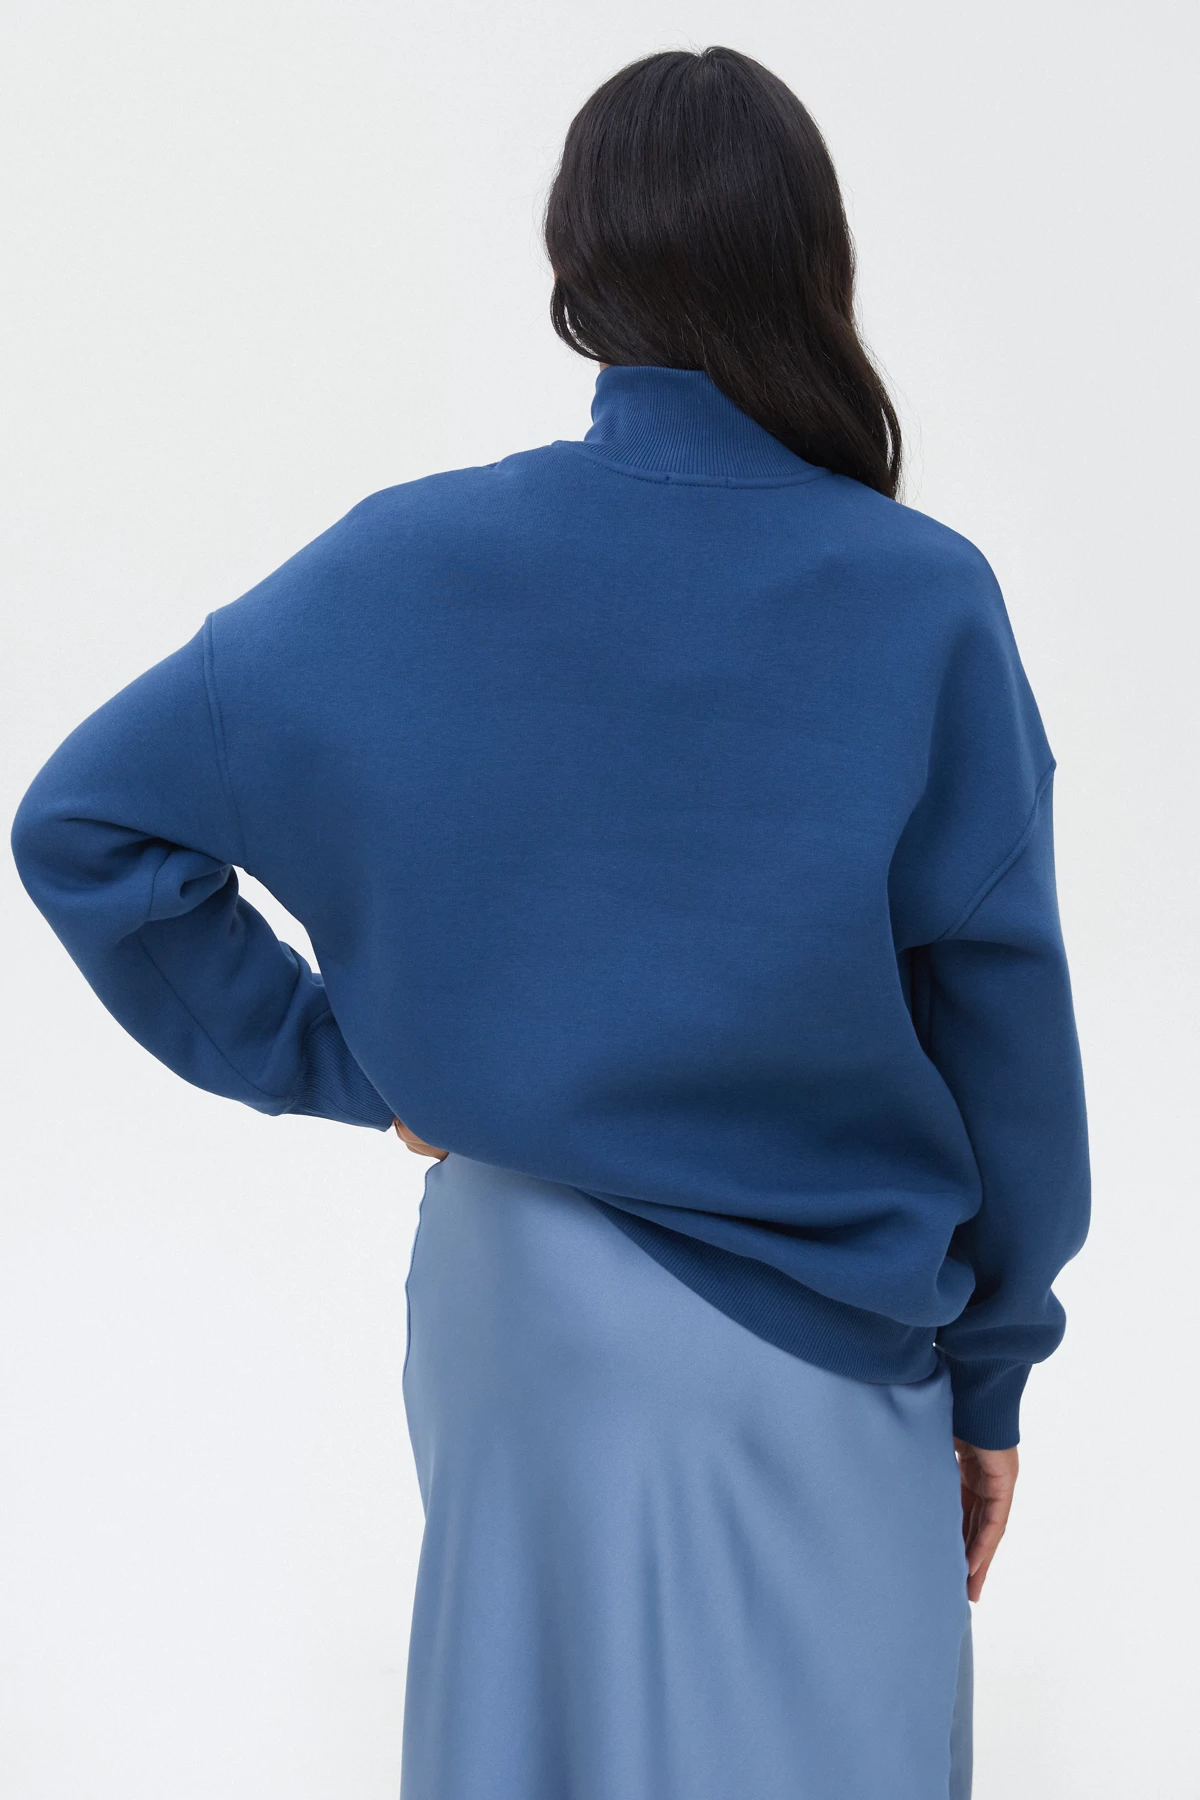 Knnitted navy blue loose sweatshirt on fleece, photo 6